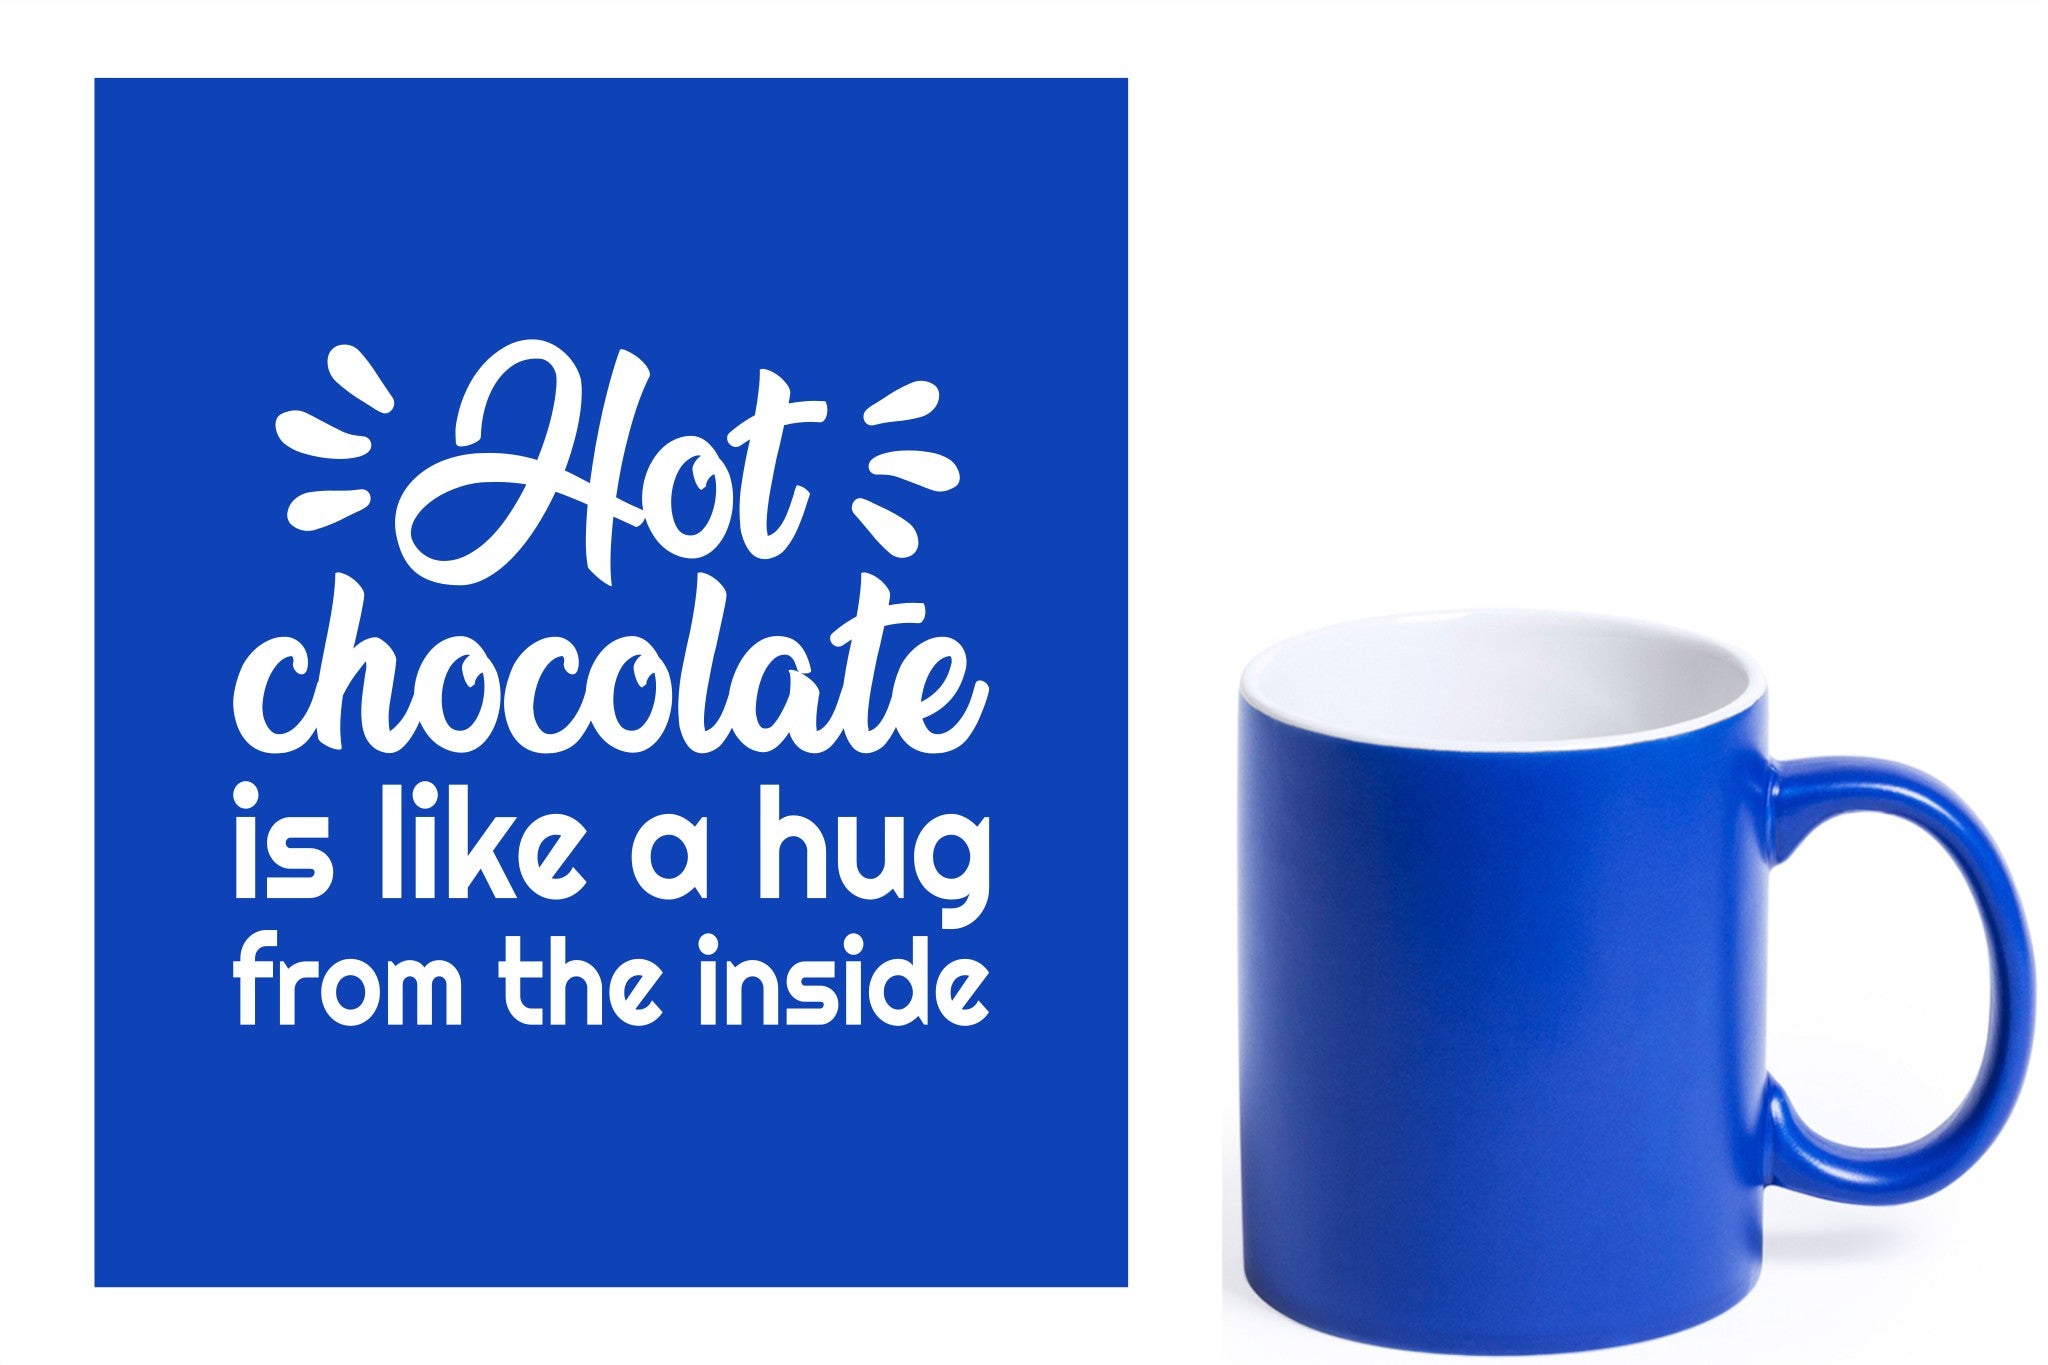 Blauwe keramische mok met witte gravure  'Hot chocolate is like a hug from the inside'.